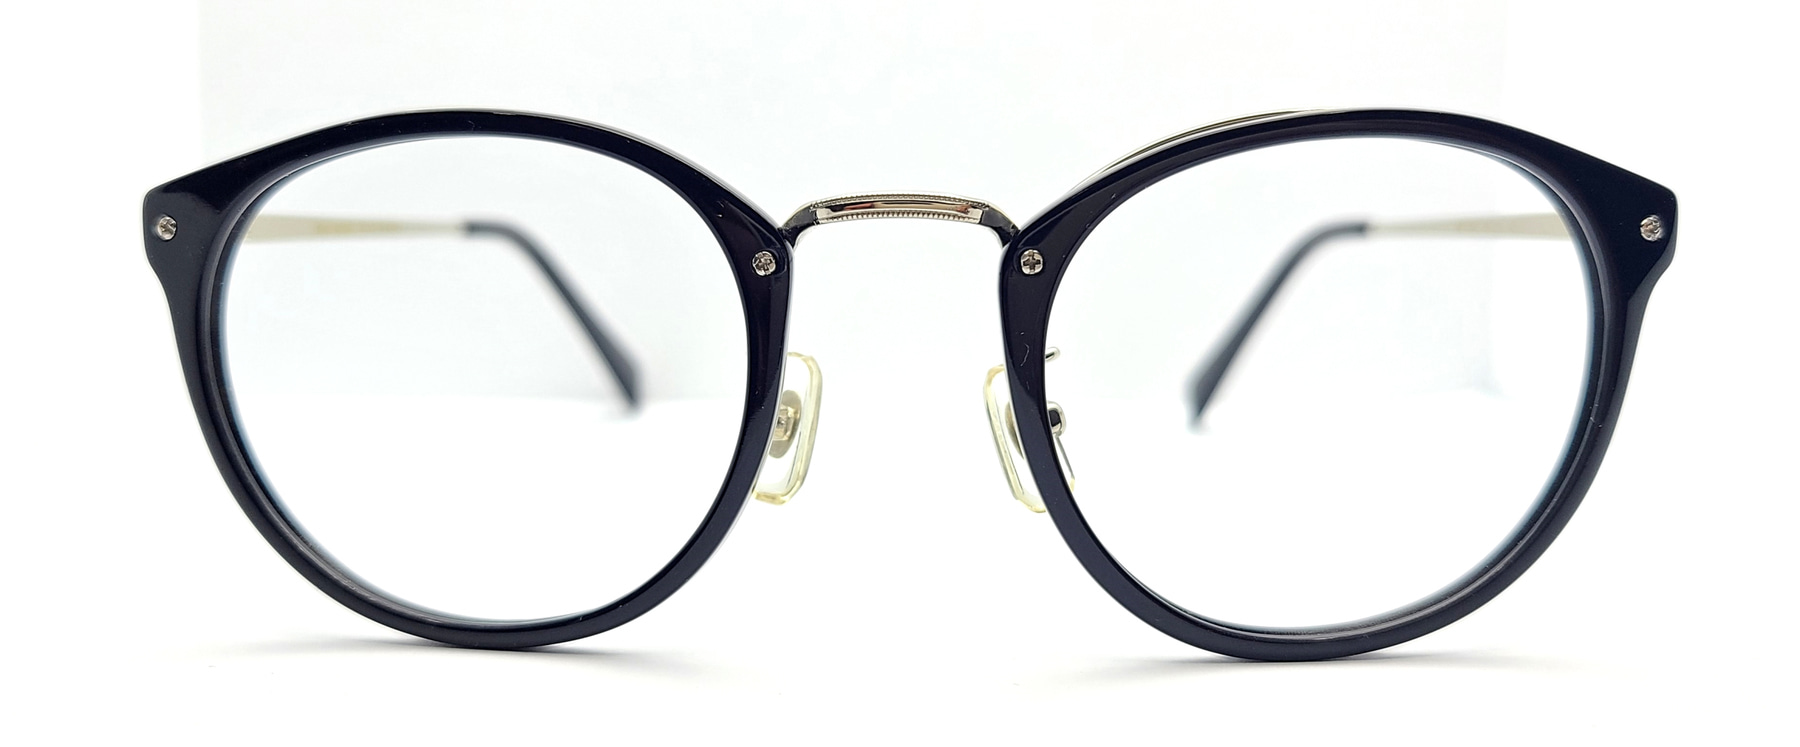 MINIHOUSE M-1387, Korean glasses, sunglasses, eyeglasses, glasses